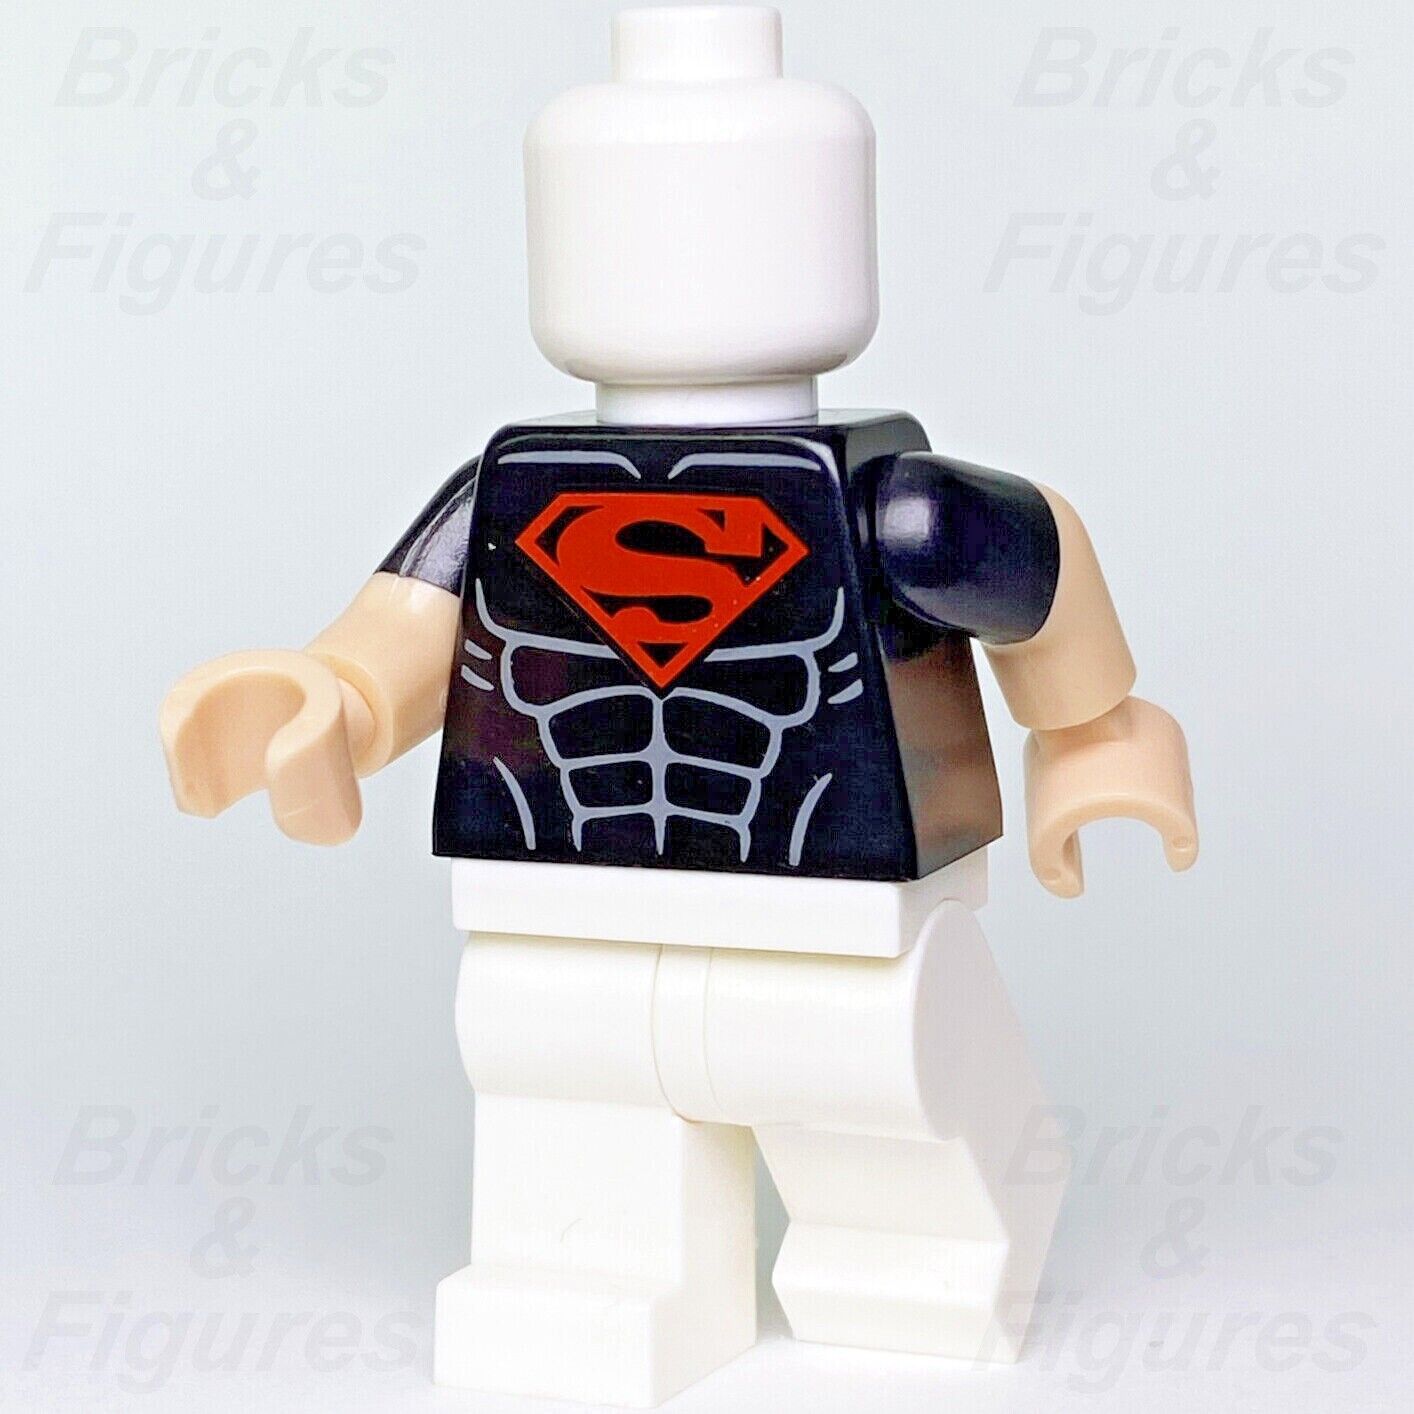 DC Super Heroes LEGO Superboy Torso Body Black S Shirt Minifigure Part 5004076 - Bricks & Figures